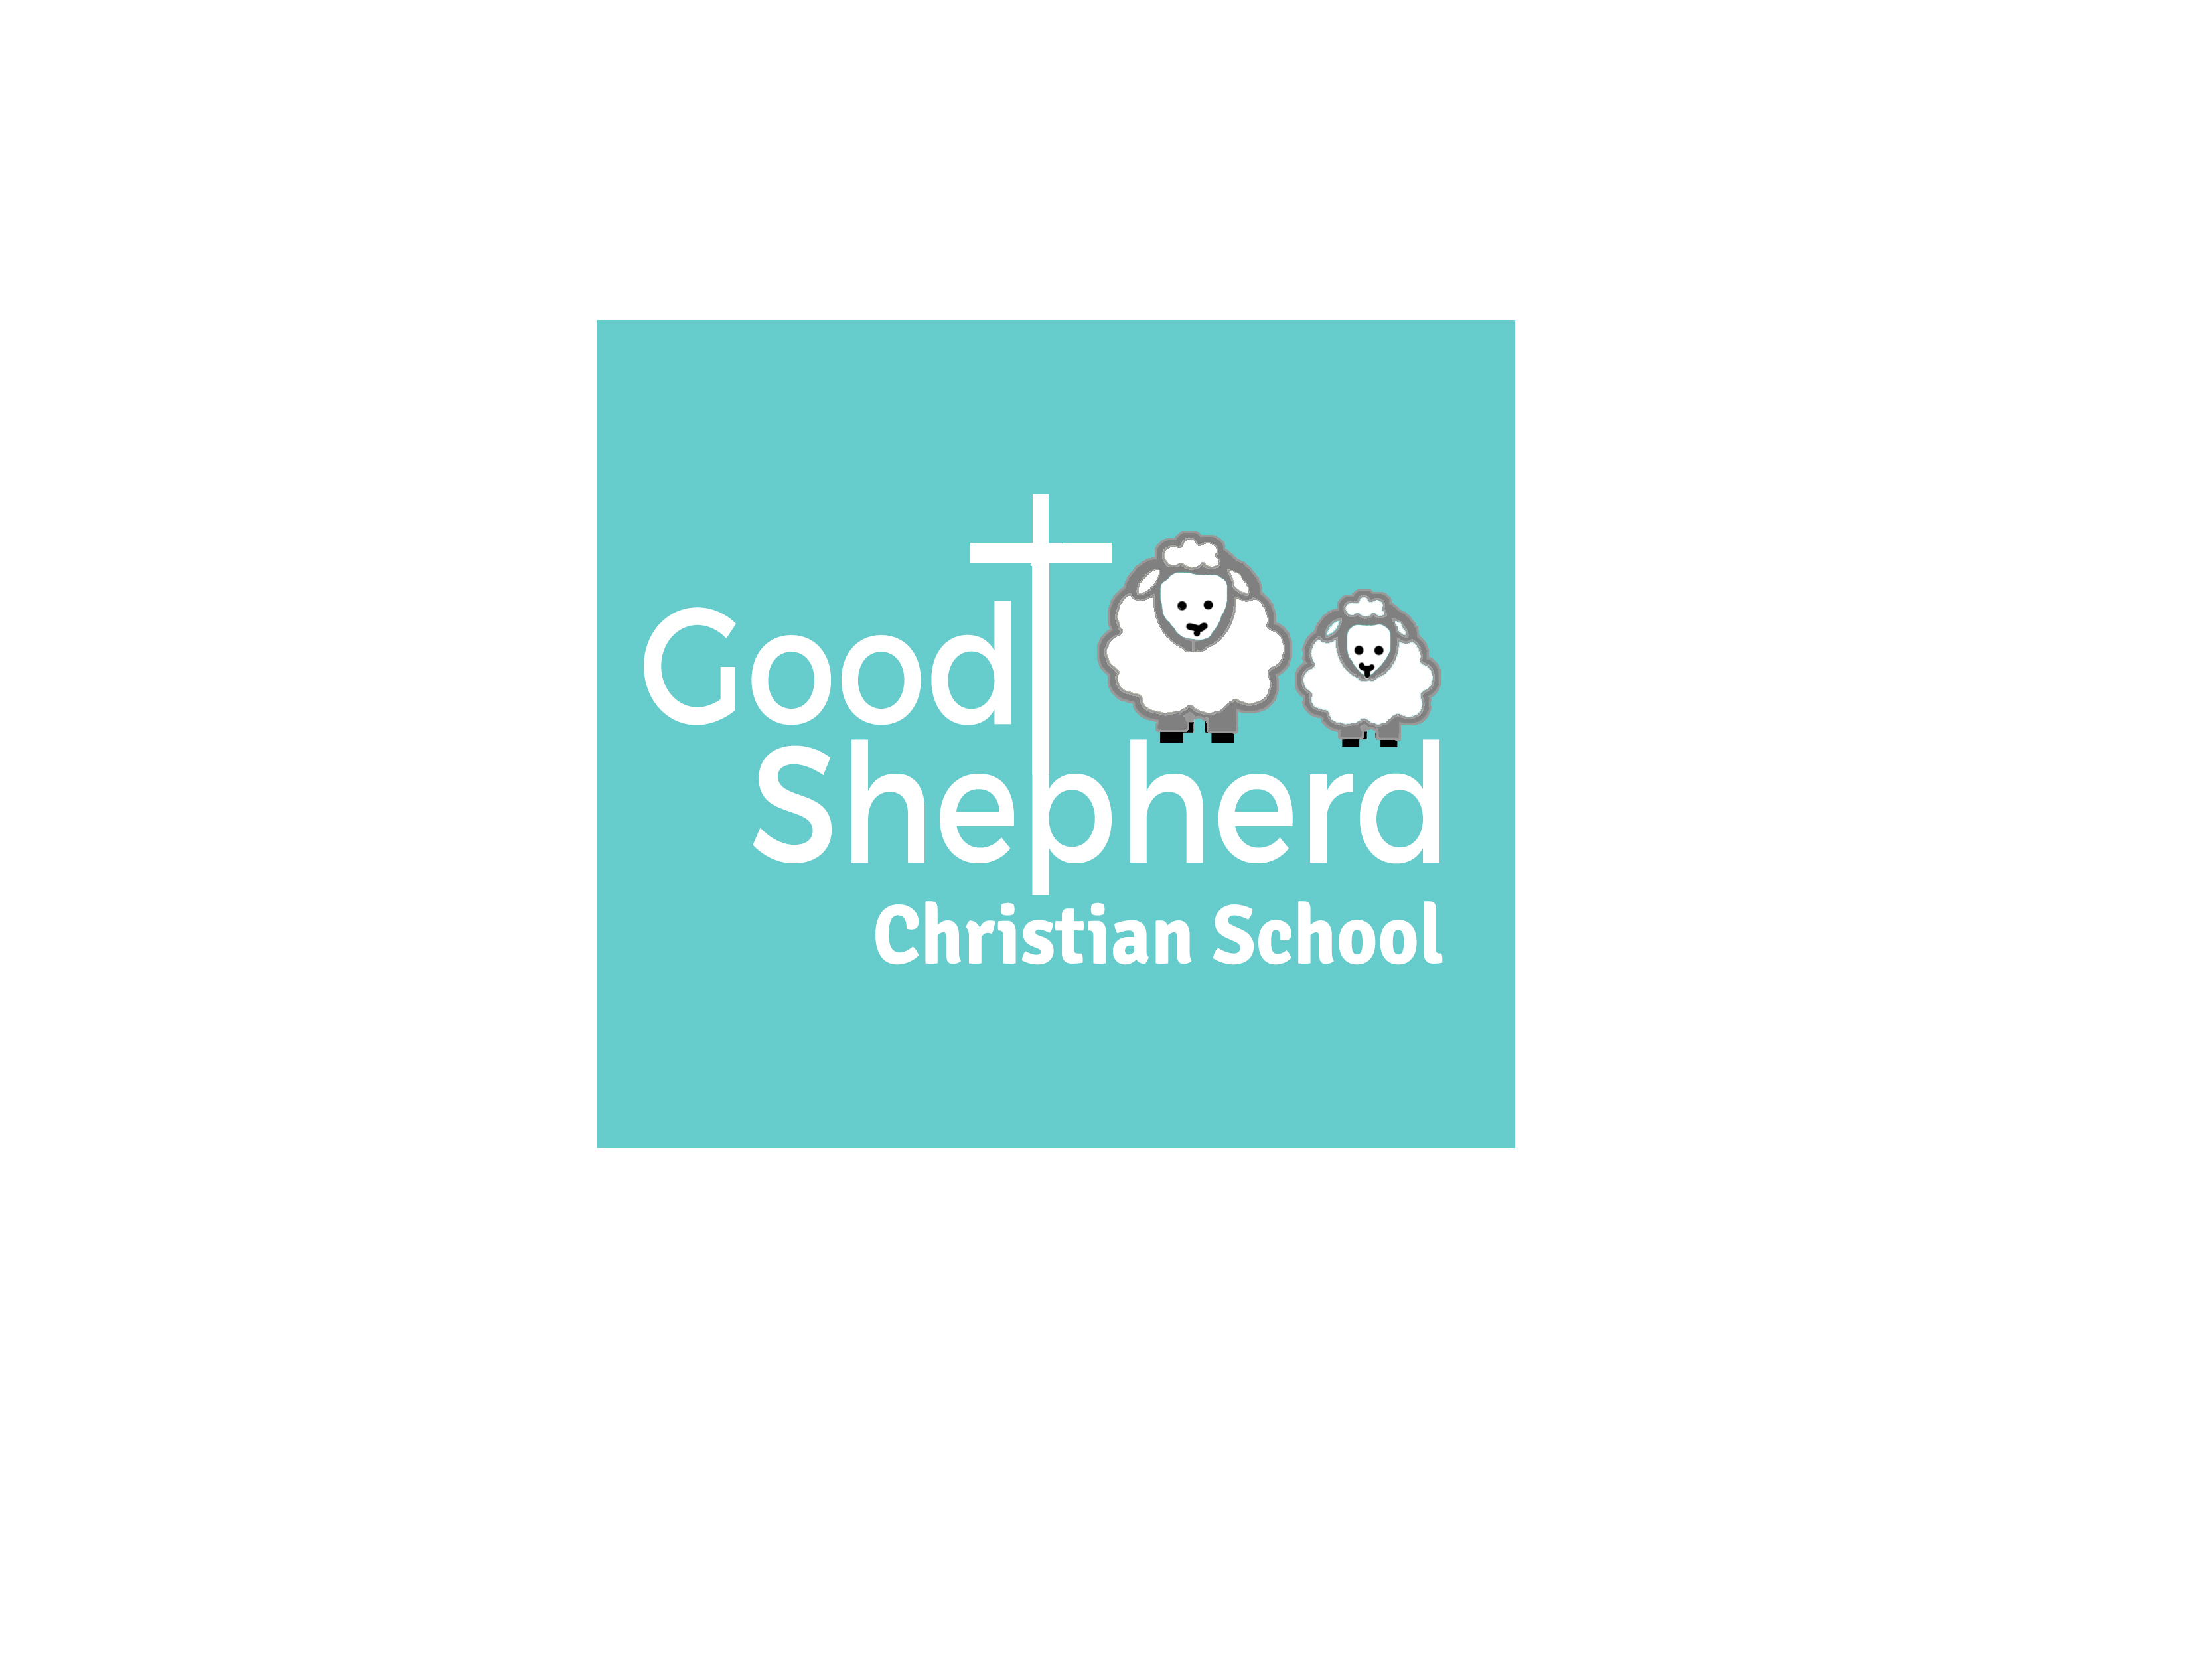 Good Shepherd Christian School Logo